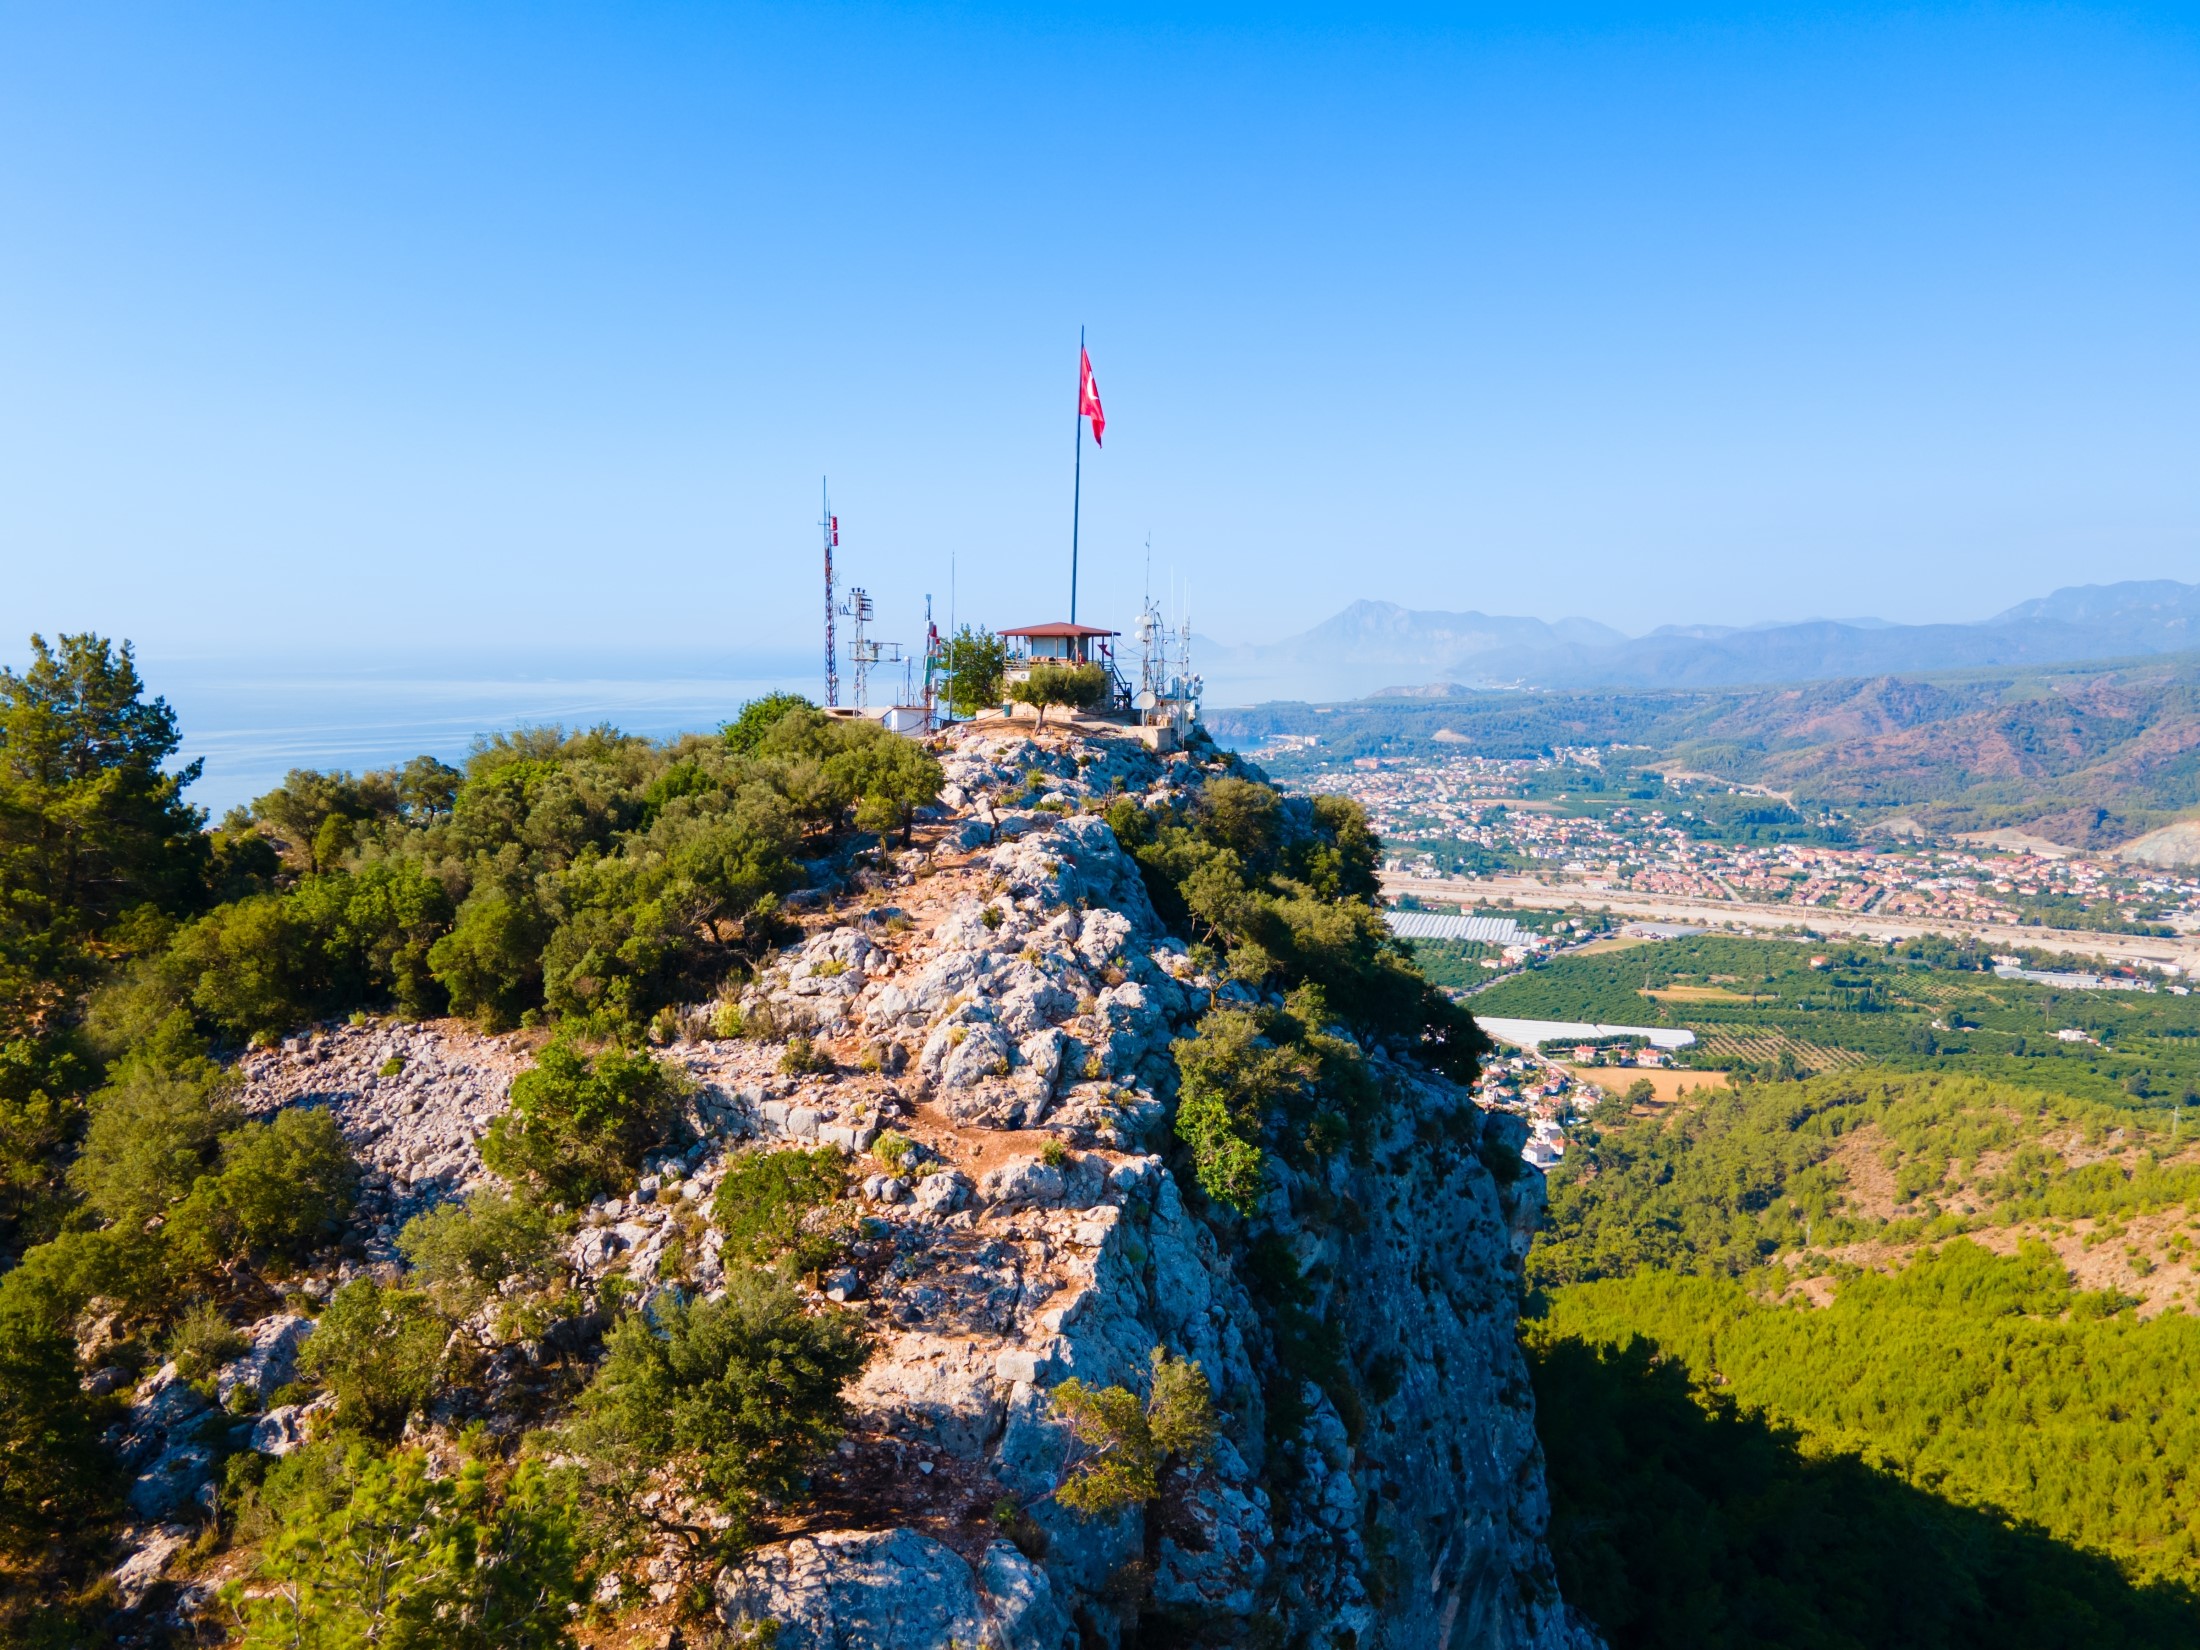 Idyros viewpoint in Kemer. Kemer is a seaside resort town in Antalya Province in Turkey.